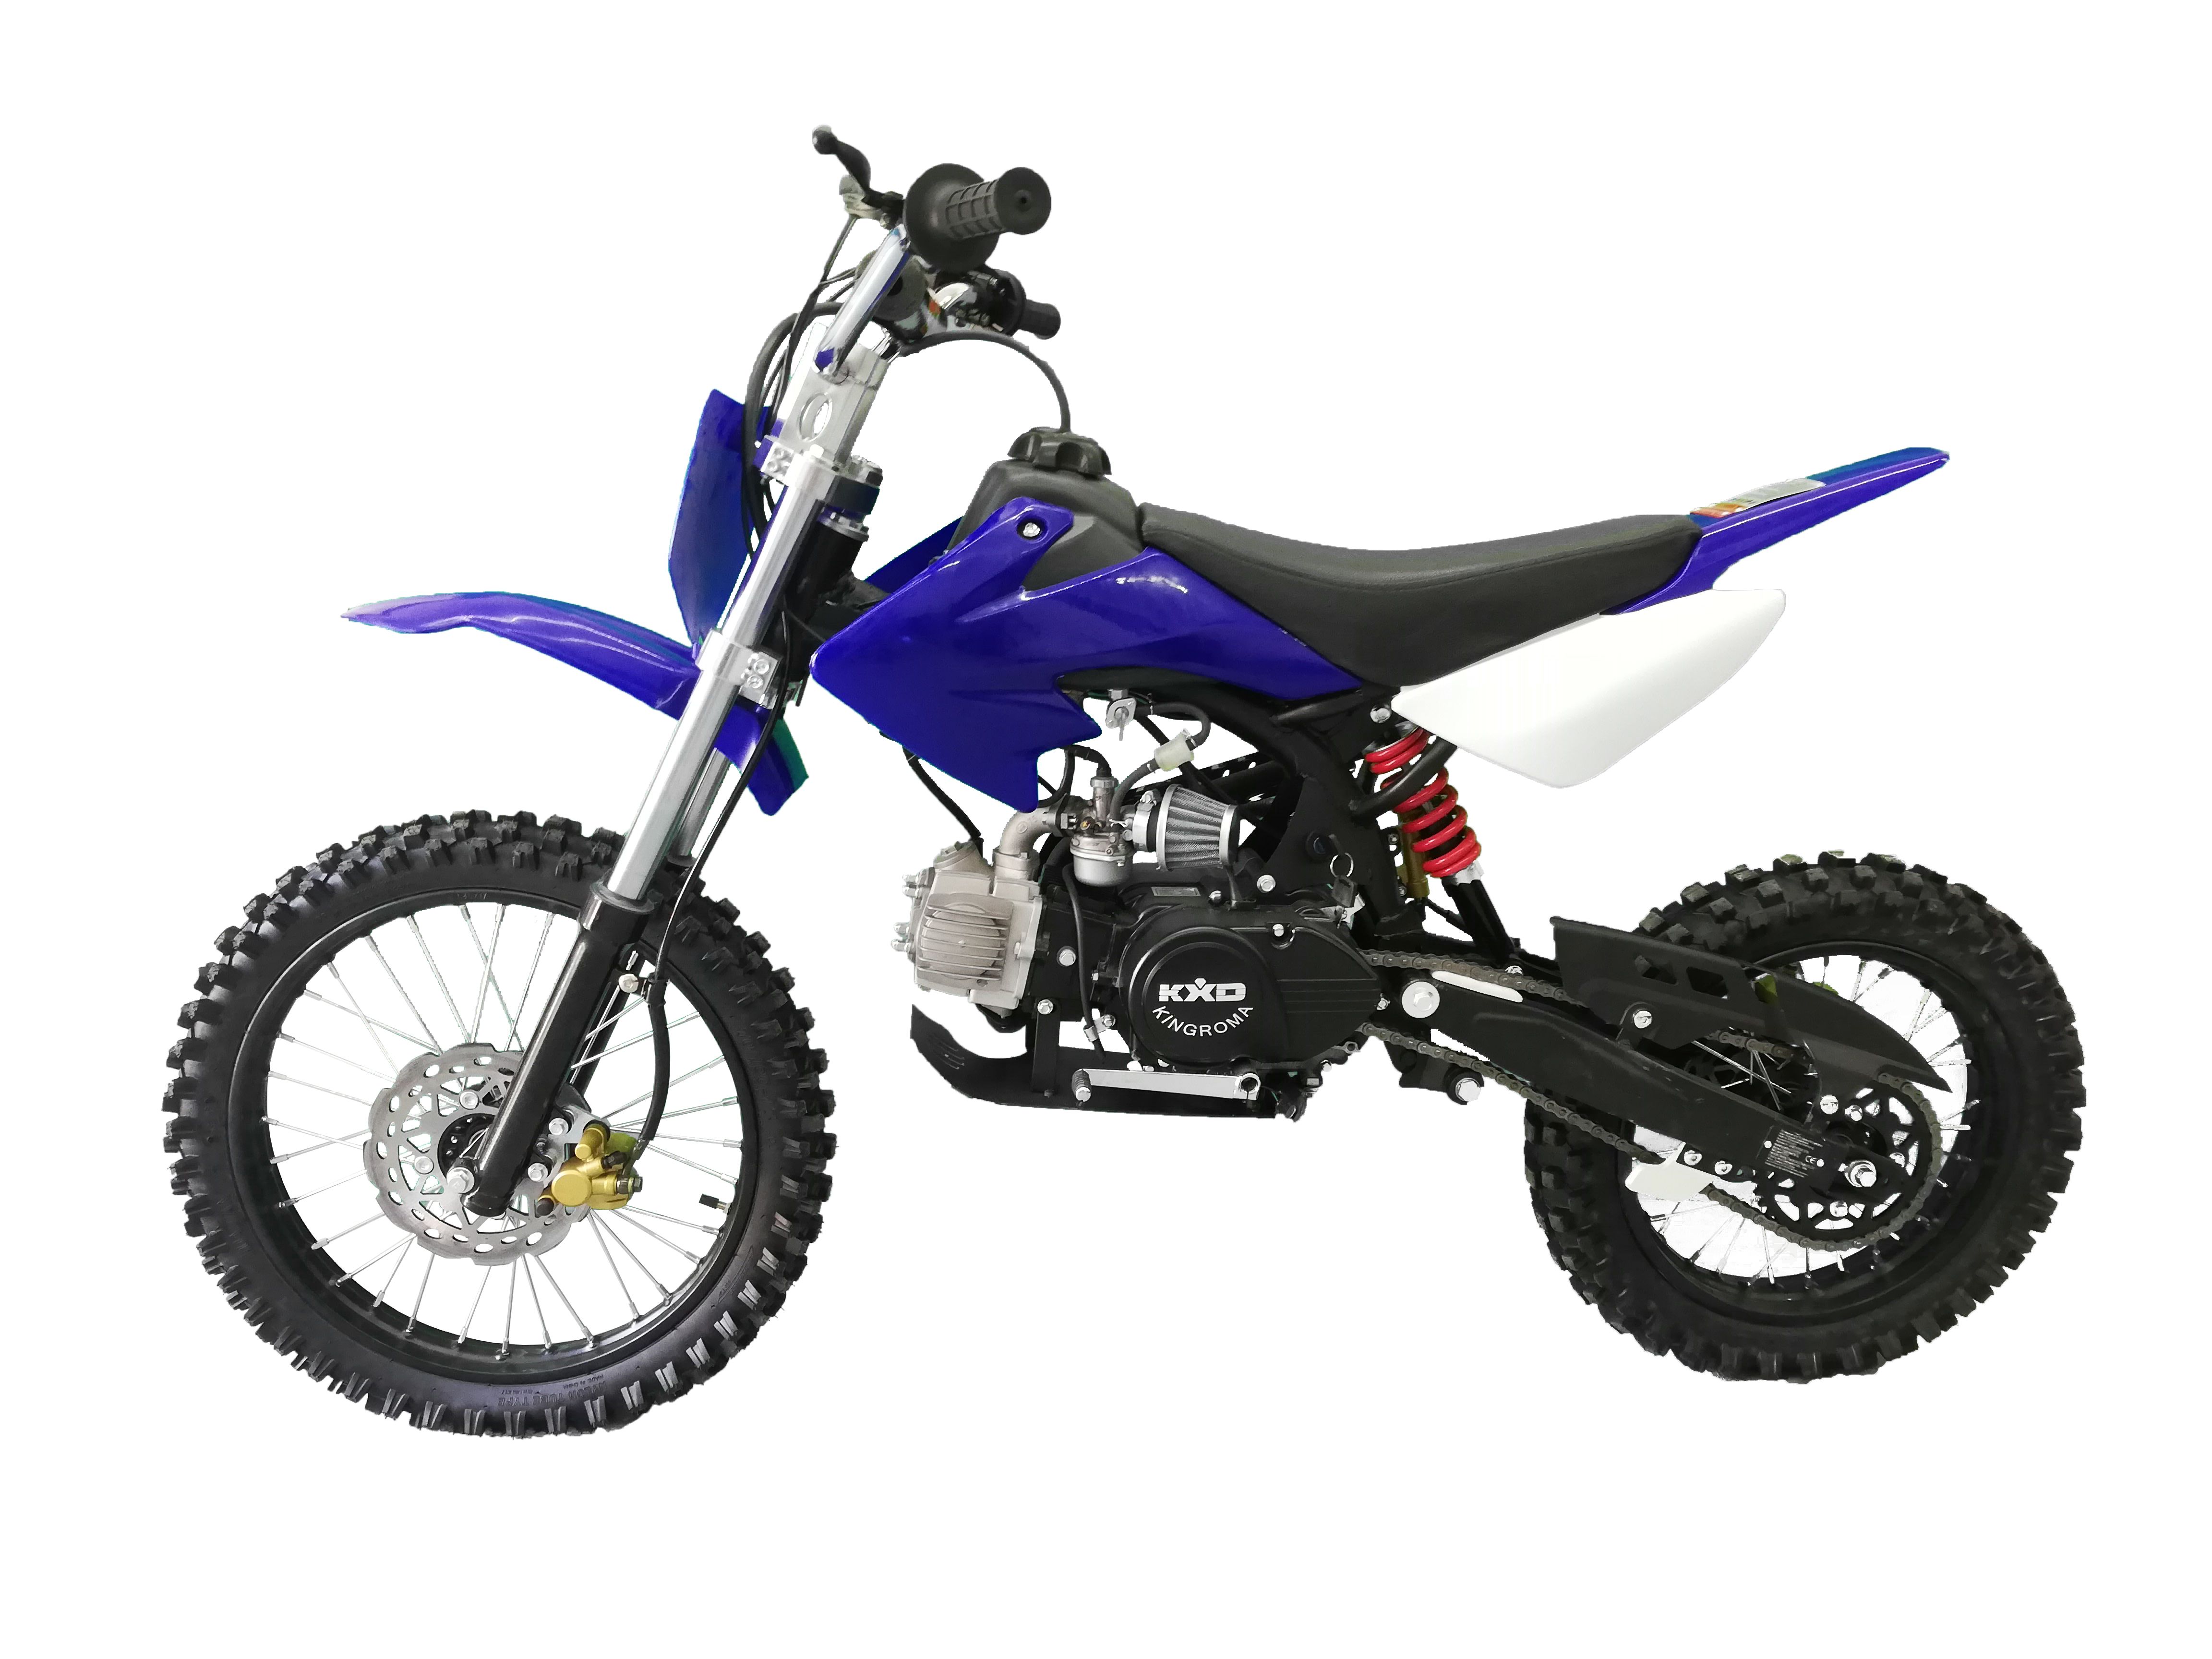 Motocicleta cross copii kxd 125cc db 607 4t roti 17"/14" culoare albastru , pornire la pedala